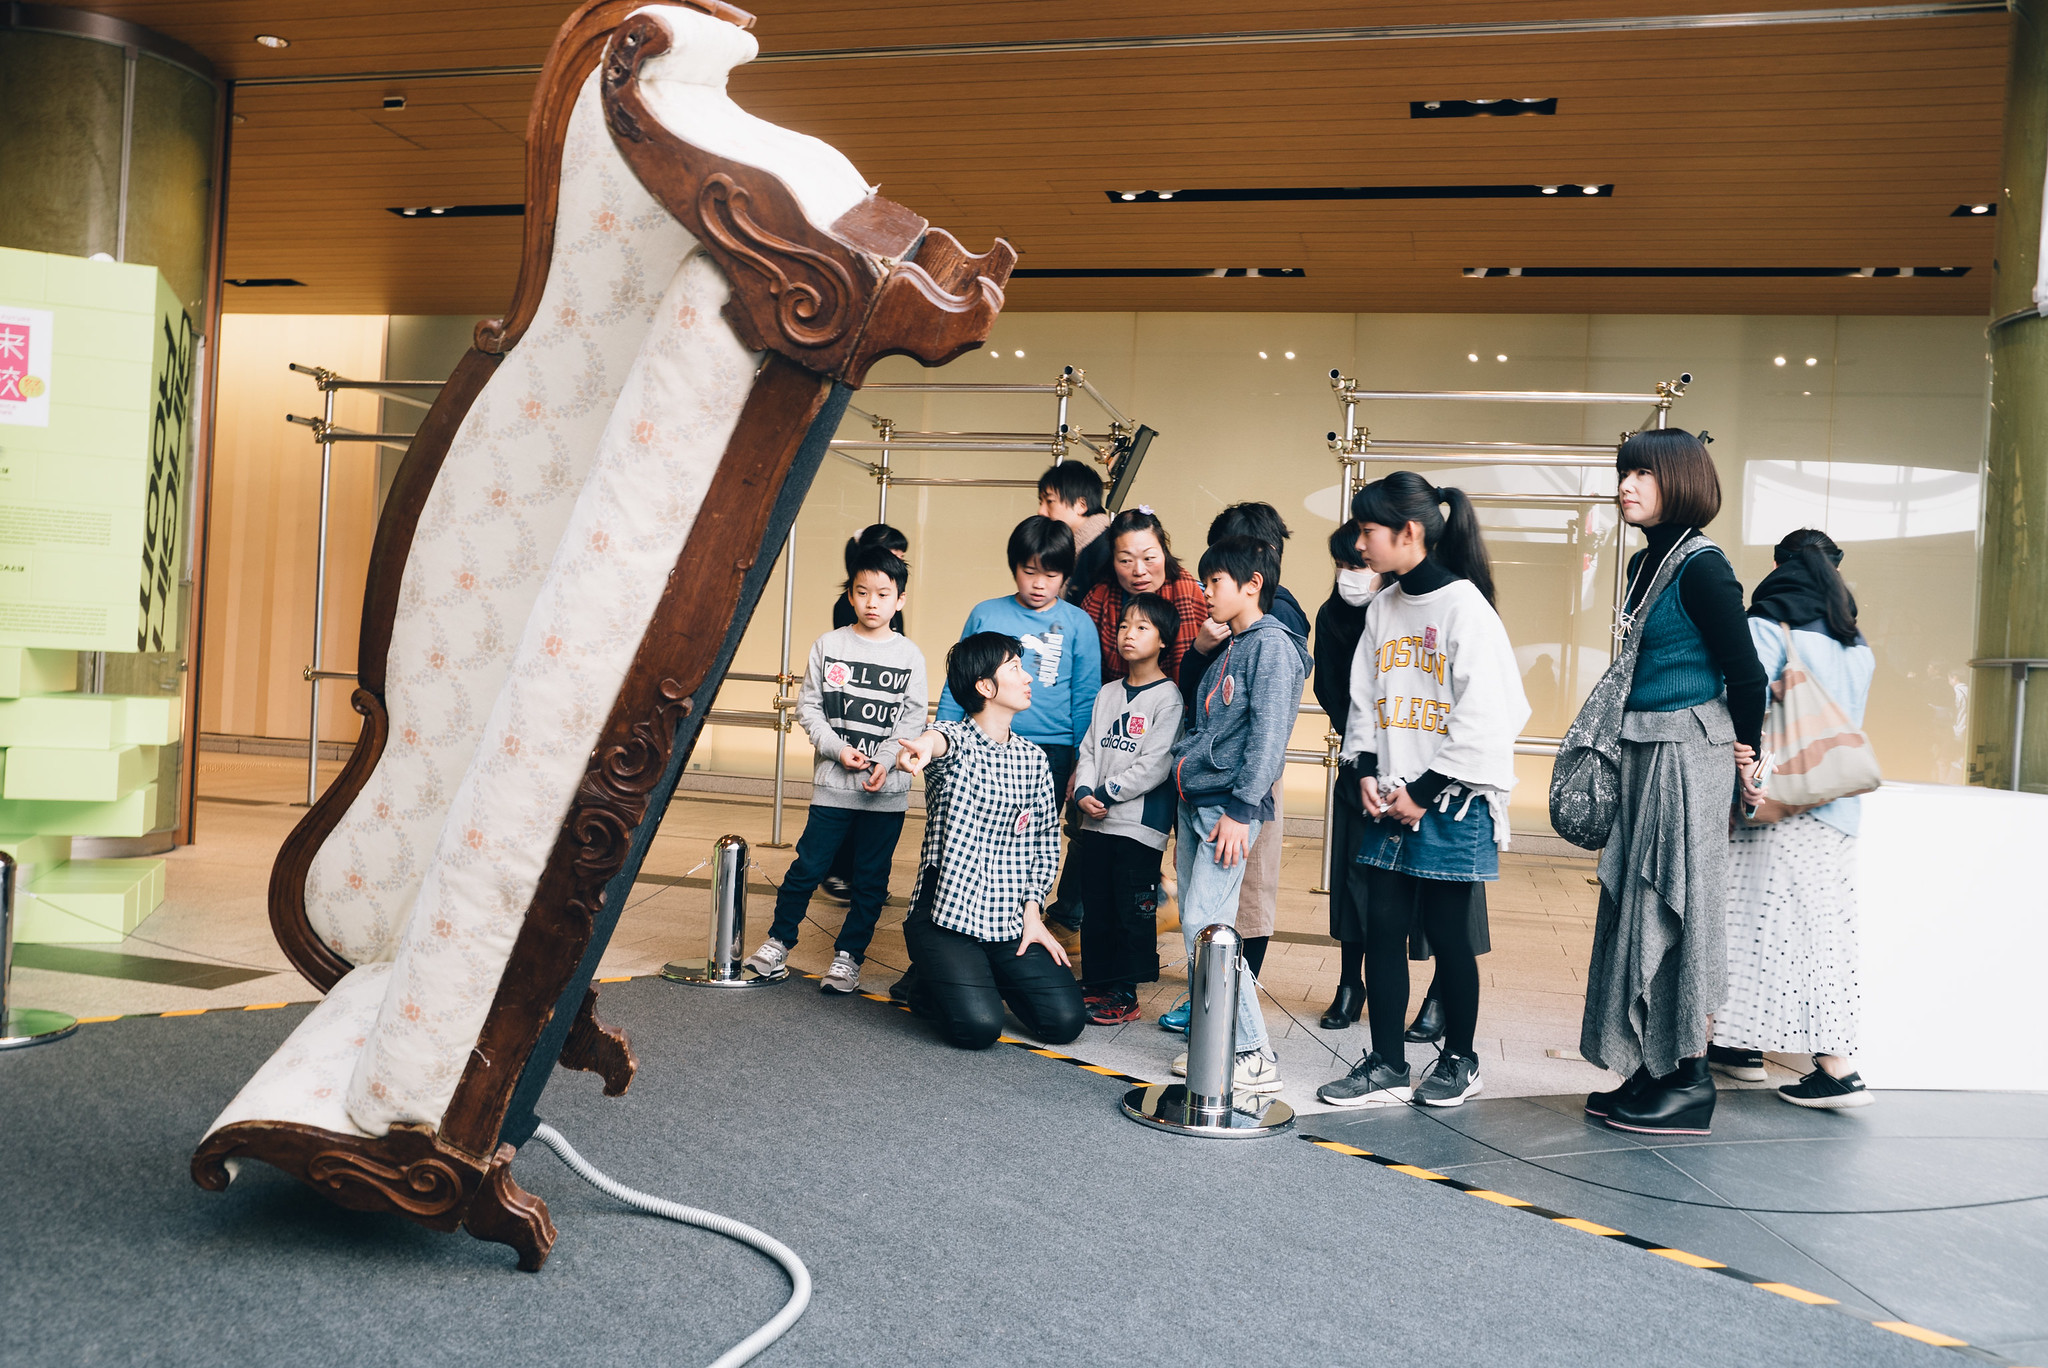 School of the Future Festival 2019 - Tokyo Midtown